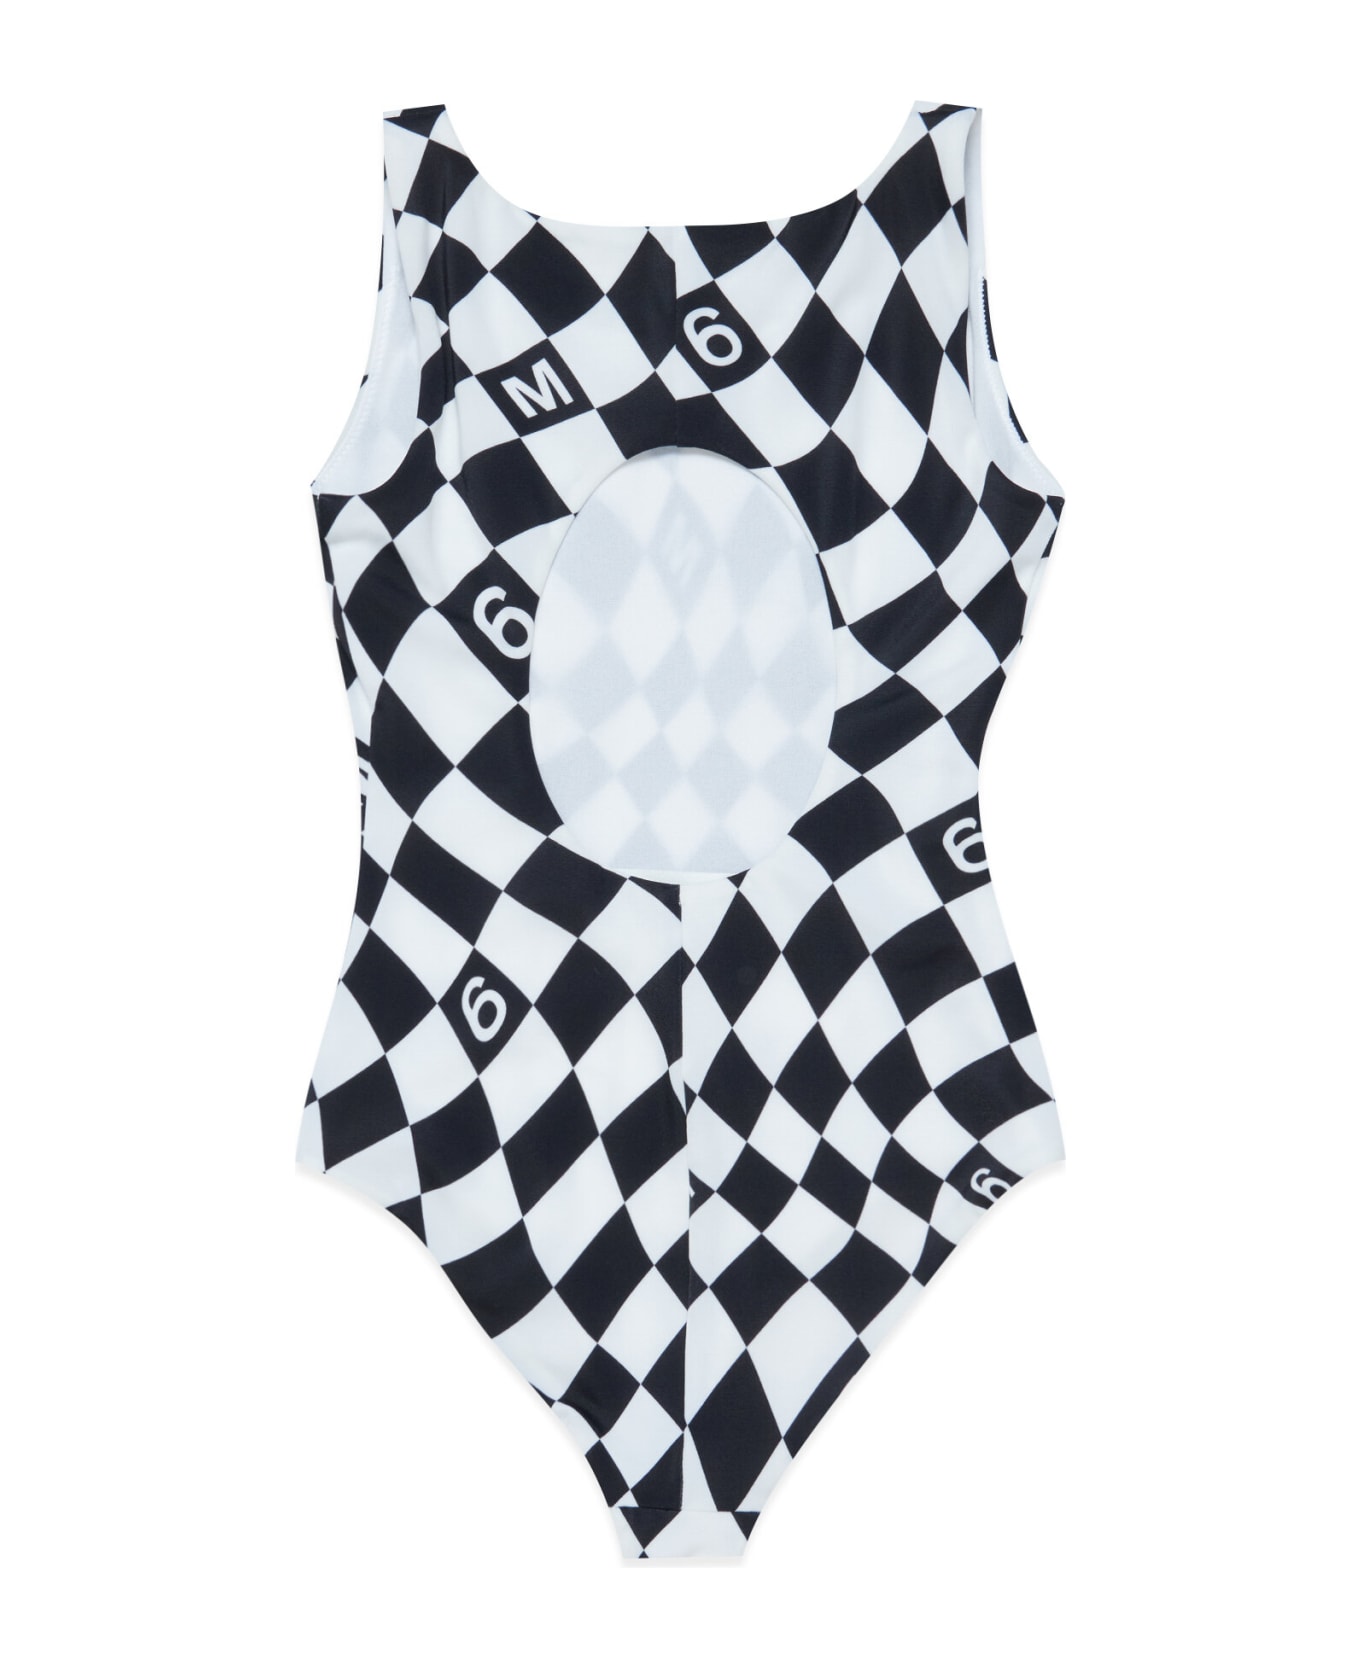 MM6 Maison Margiela Mm6m1u Swimsuit Maison Margiela One-piece Swimming Costume With Black And White Chequered Pattern - White/black